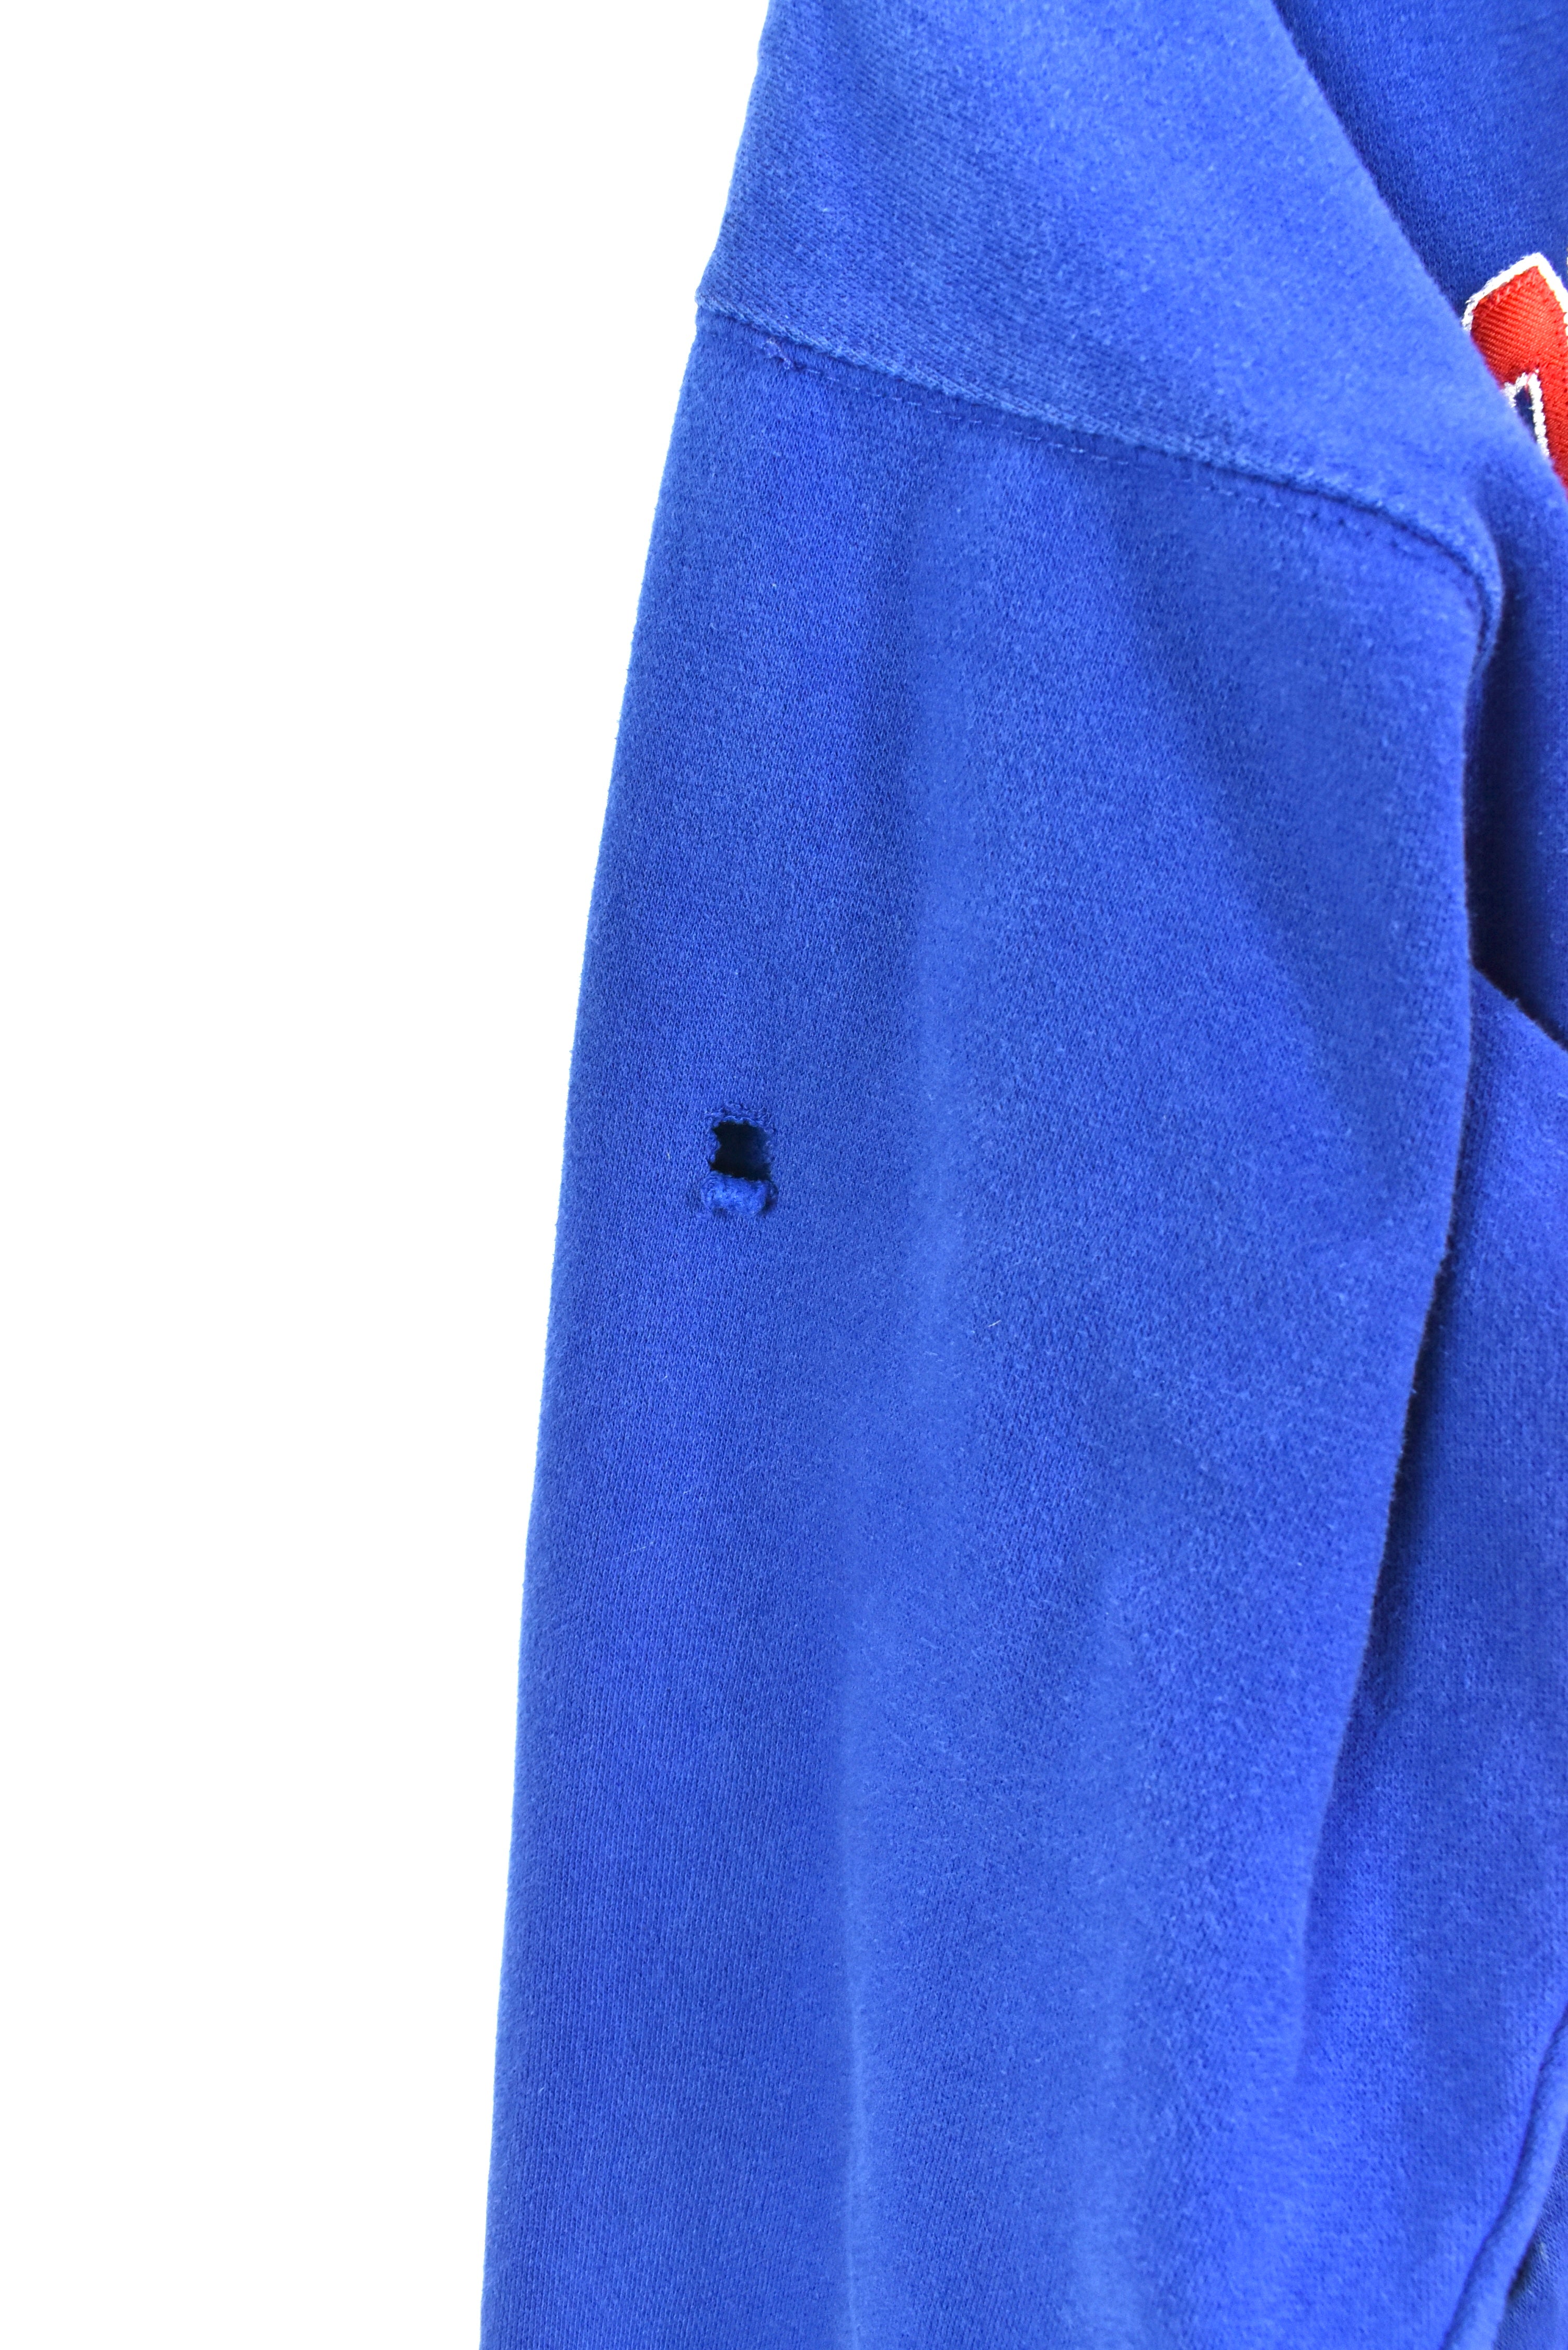 Vintage Louisiana Tech University hoodie, blue embroidered sweatshirt - AU XXL COLLEGE